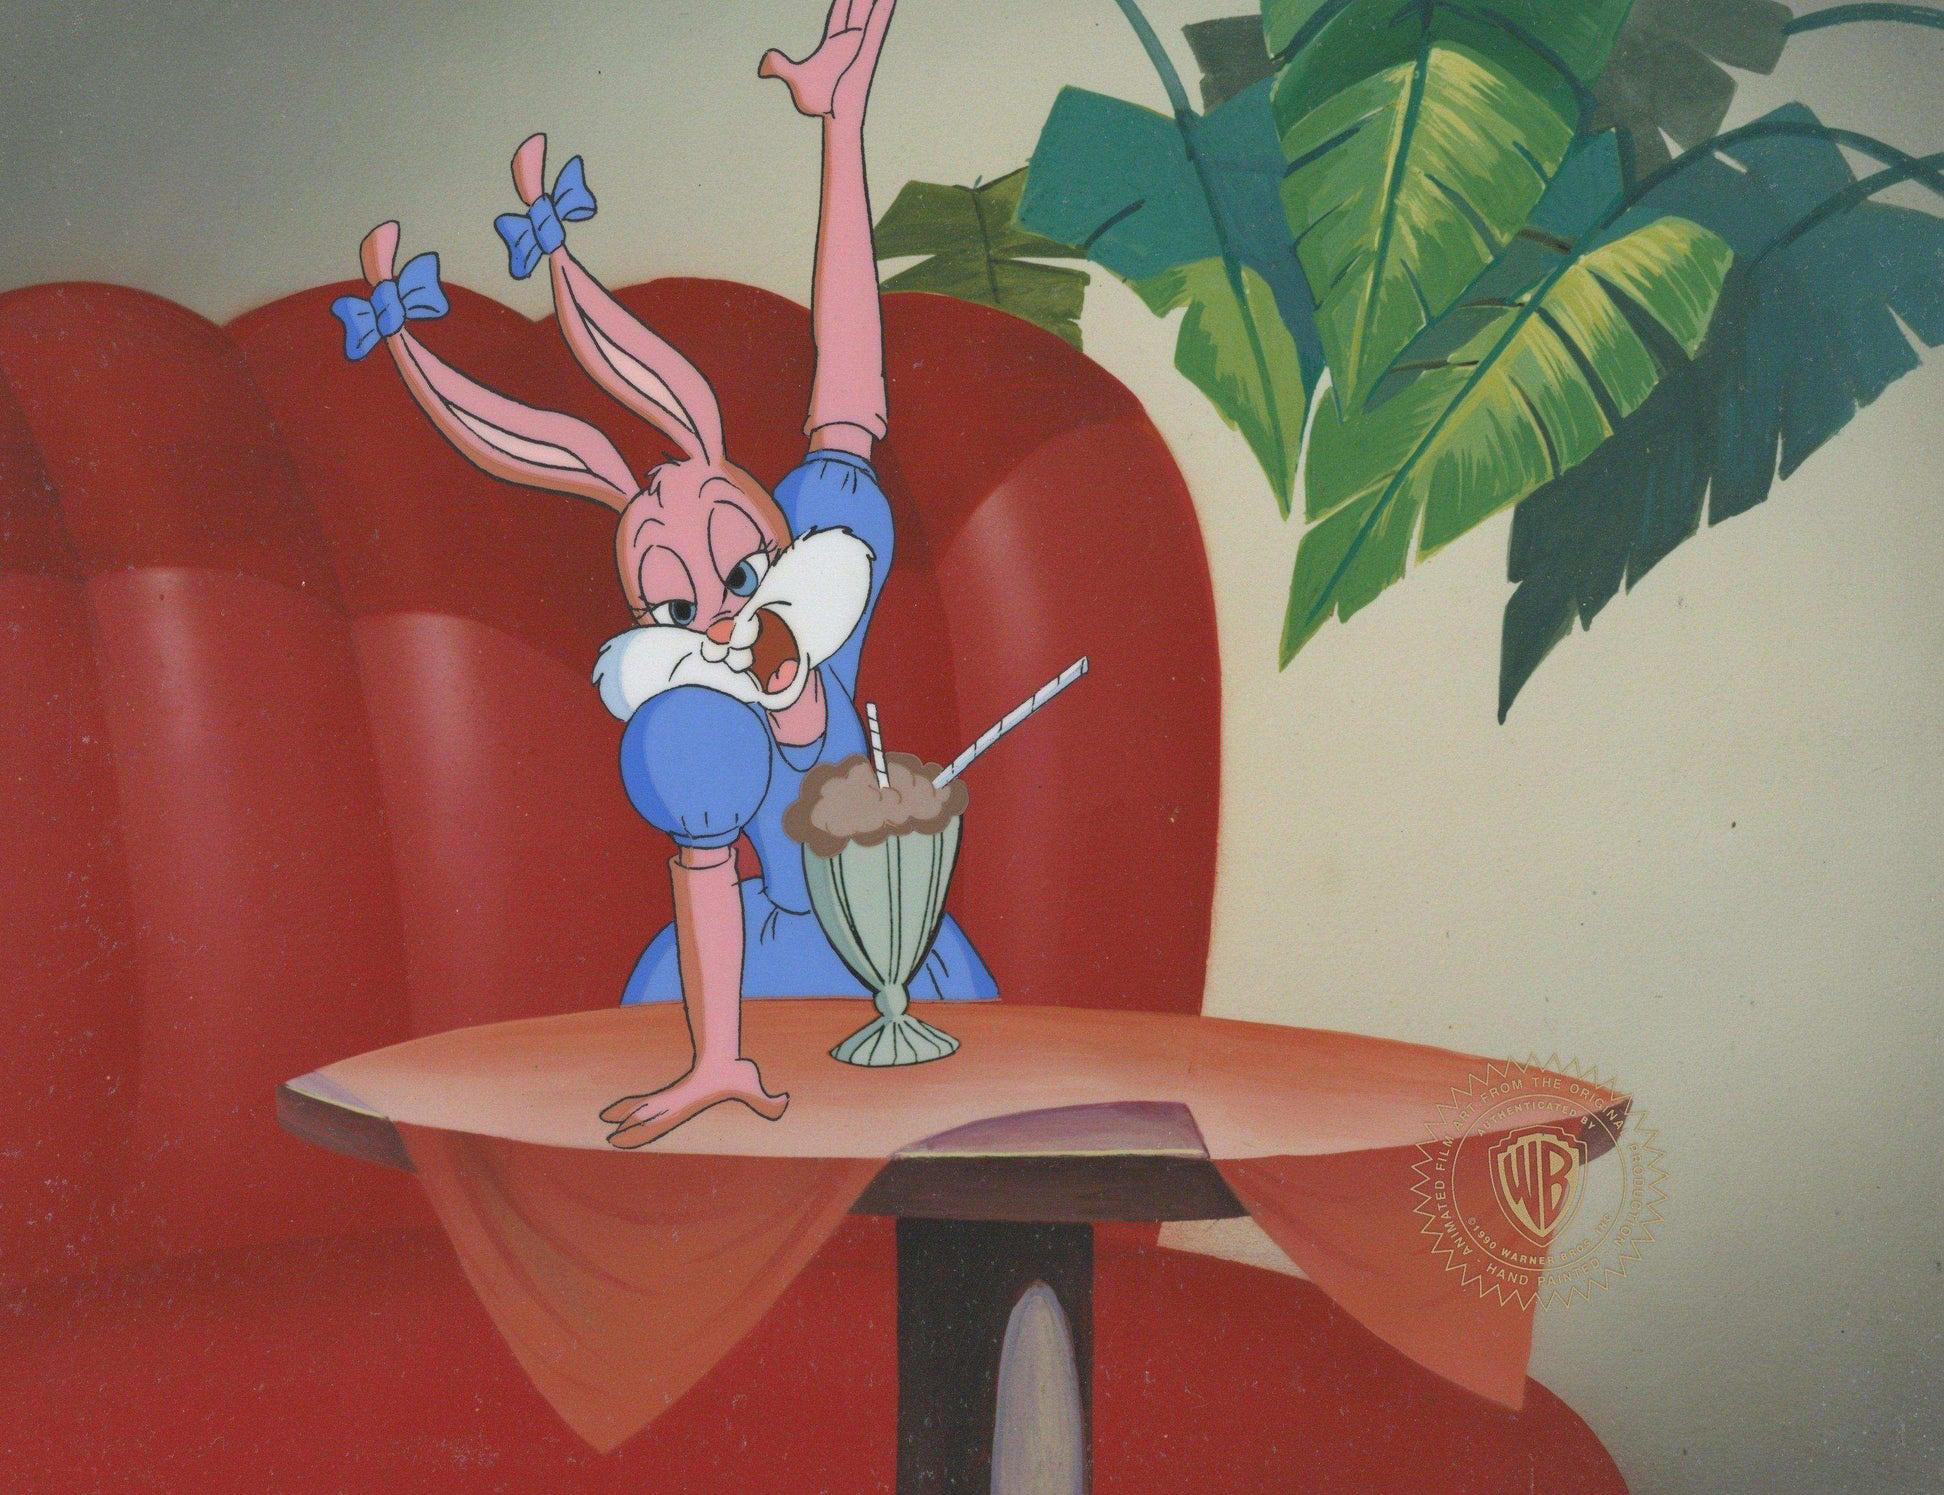 Tiny Toons Original Production Cel: Babs Bunny - Art by Warner Bros. Studio Artists